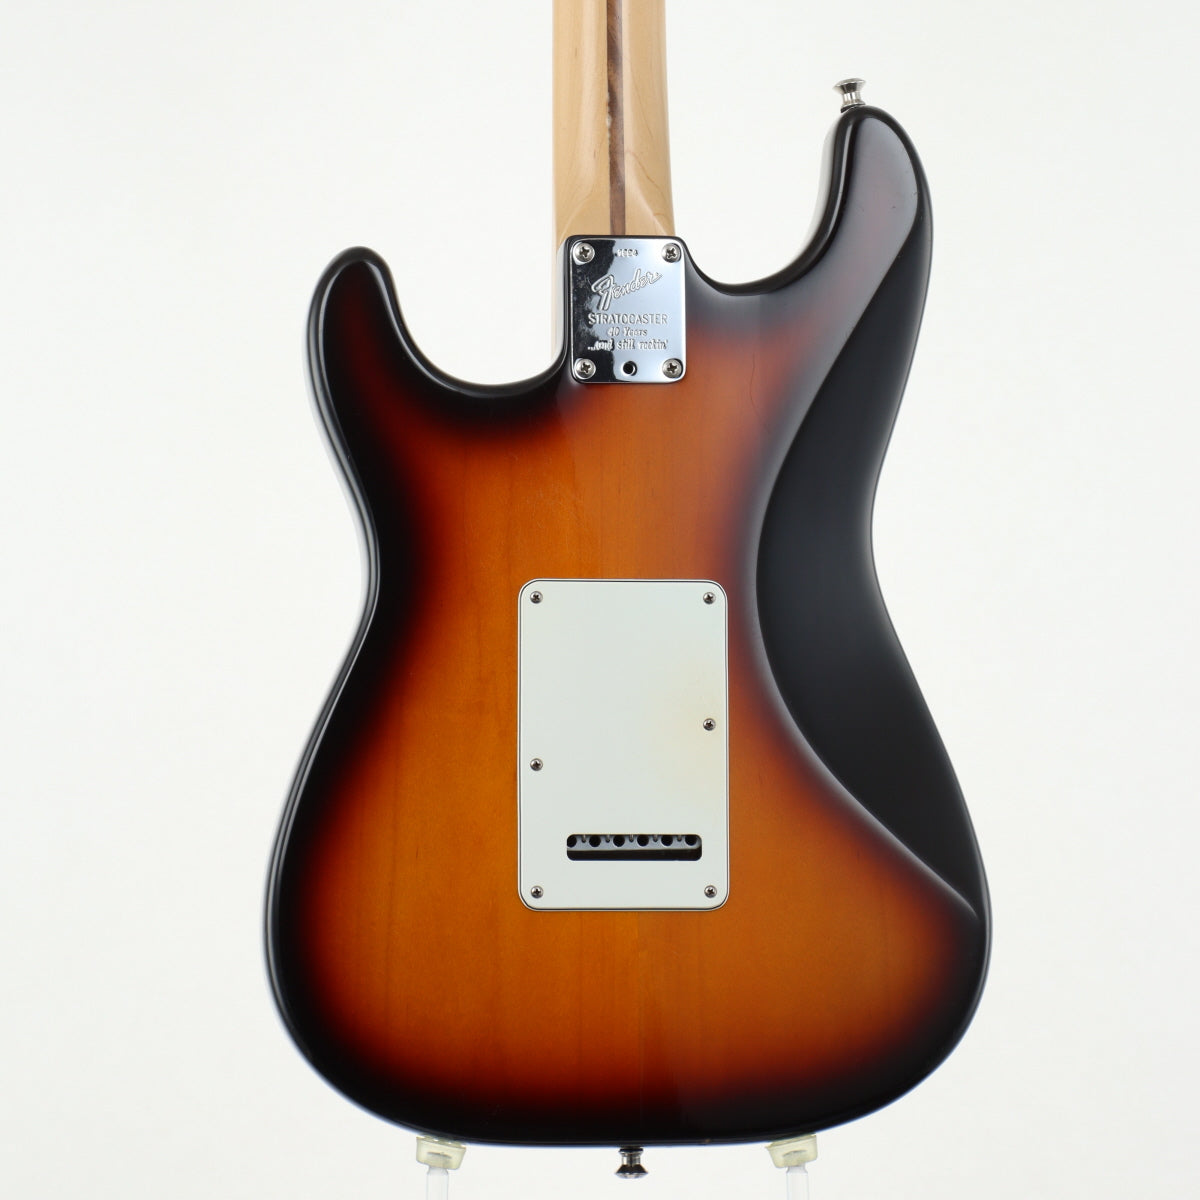 [SN N3139447] USED Fender USA Fender / 40th Anniversary American Standard Stratocaster 3-Color Sunburst [20]